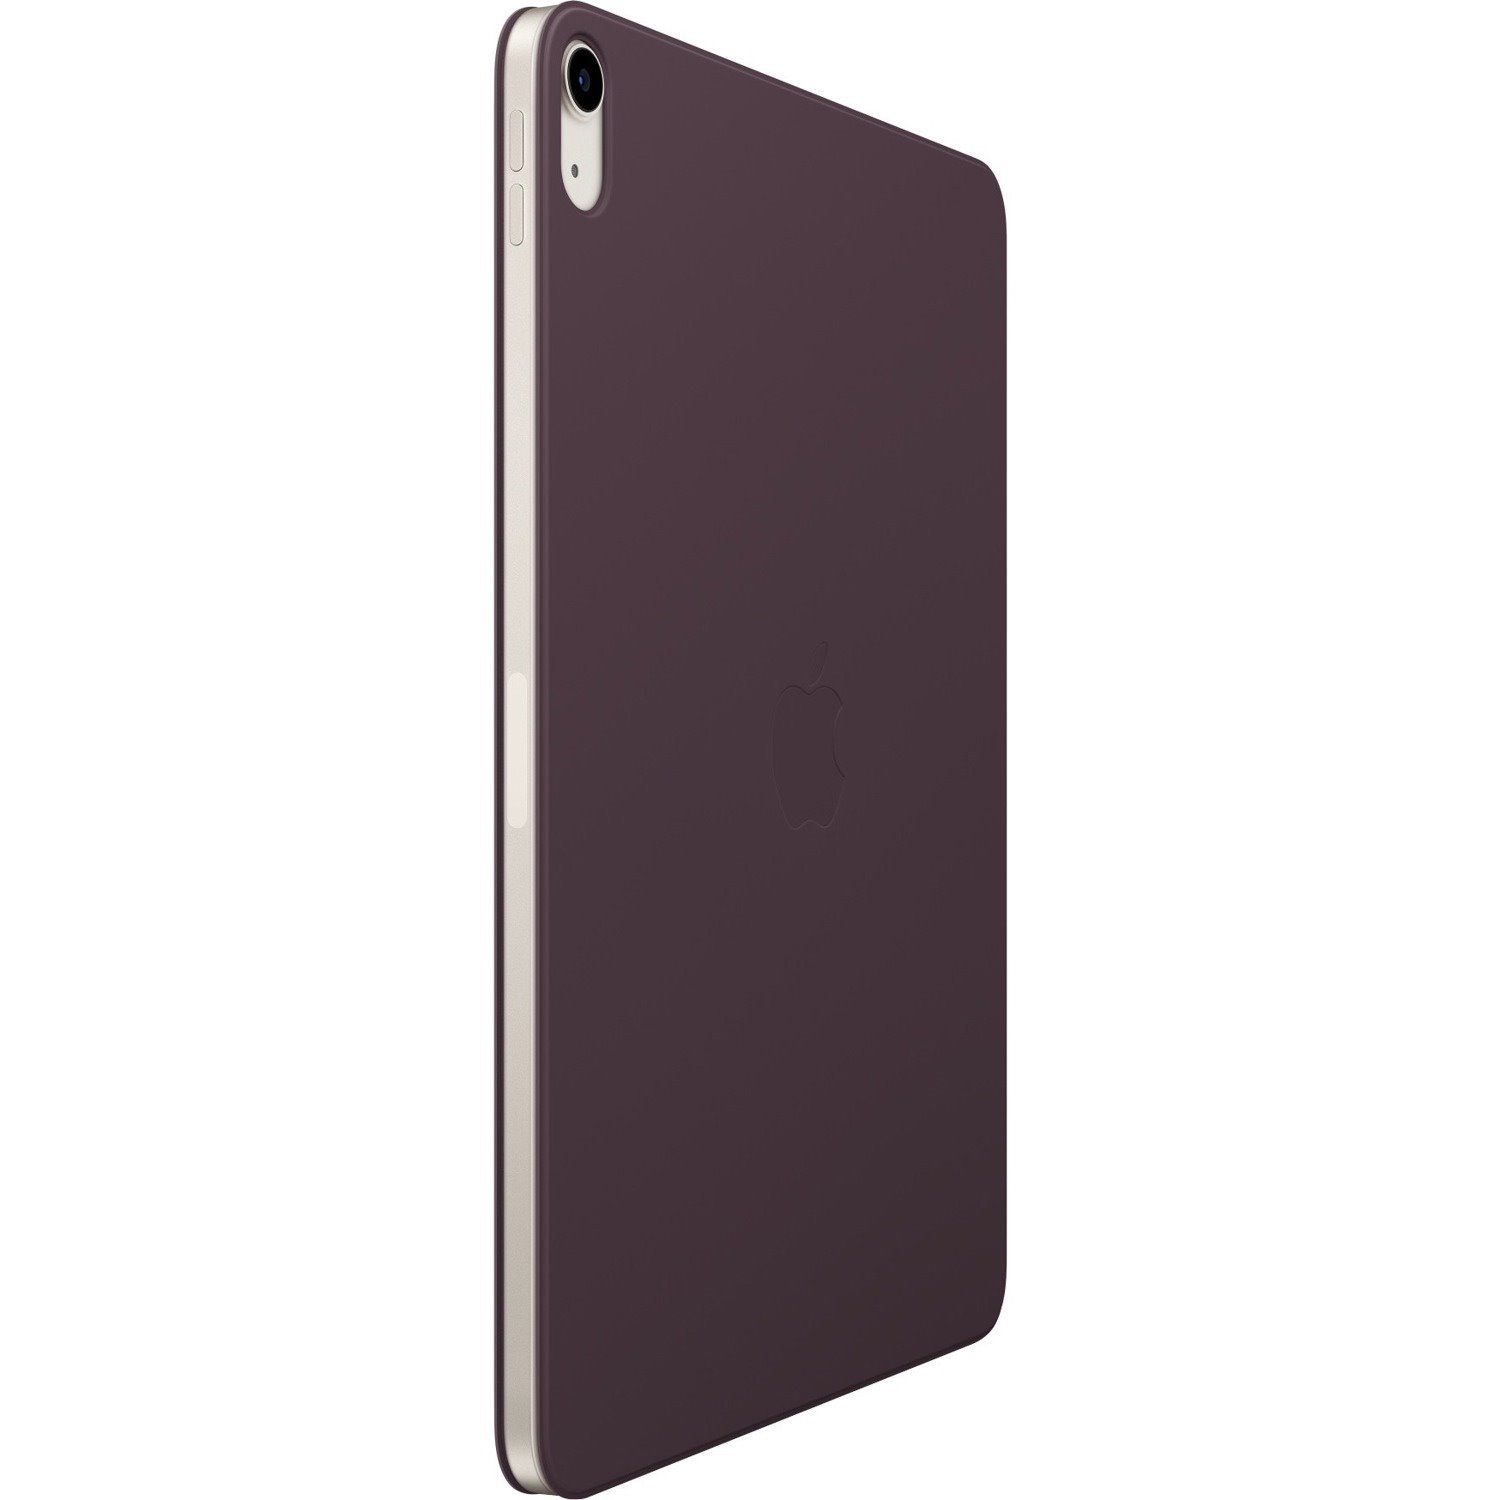 Apple Smart Folio Carrying Case (Folio) Apple iPad Air (5th Generation), iPad Air (4th Generation) Tablet - Dark Cherry